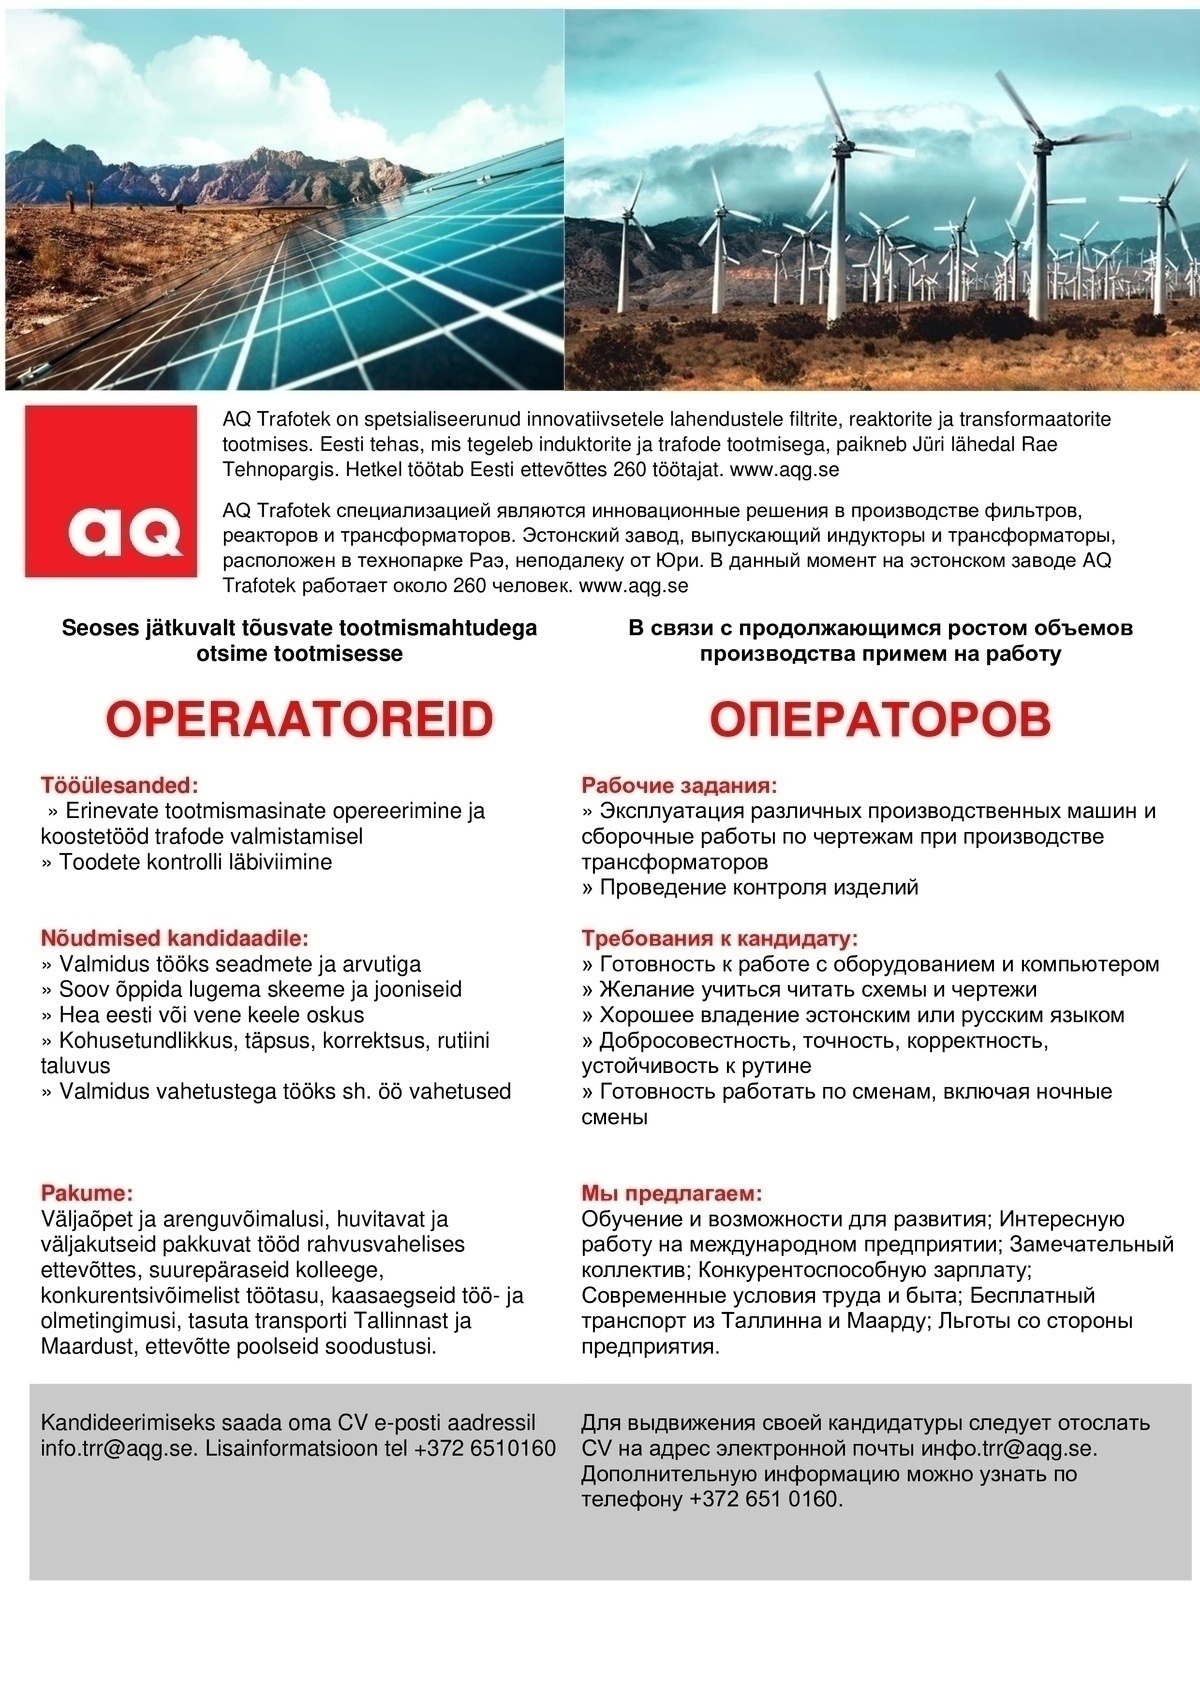 AQ Trafotek AS Tootmise operaatorid / Операторы на производстве